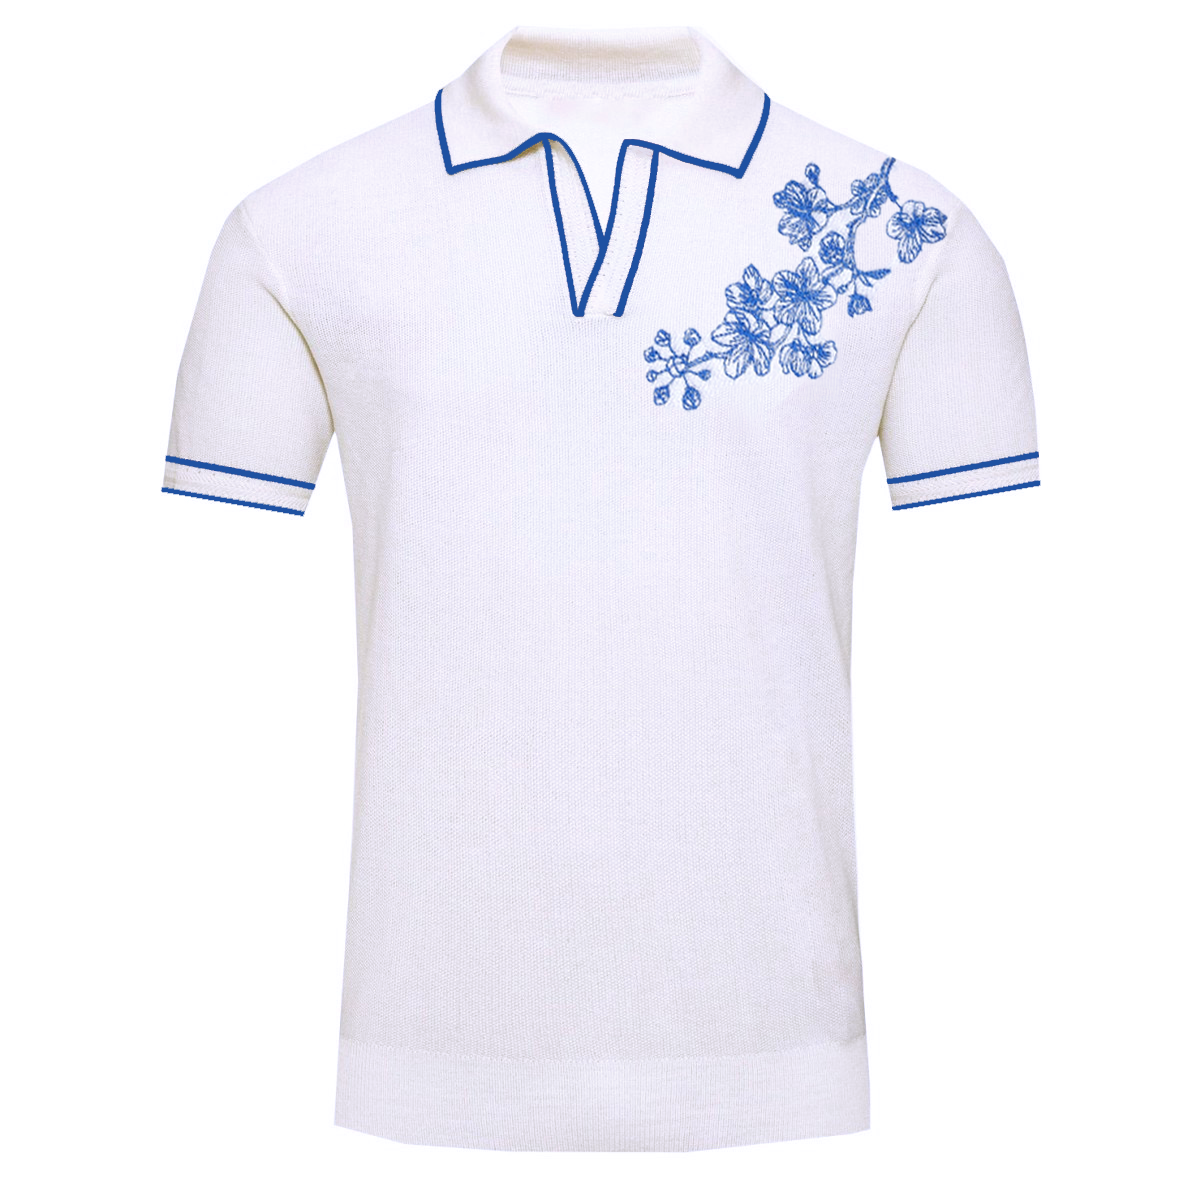 Men's white vintage V-neck embroidered knit polo shirt